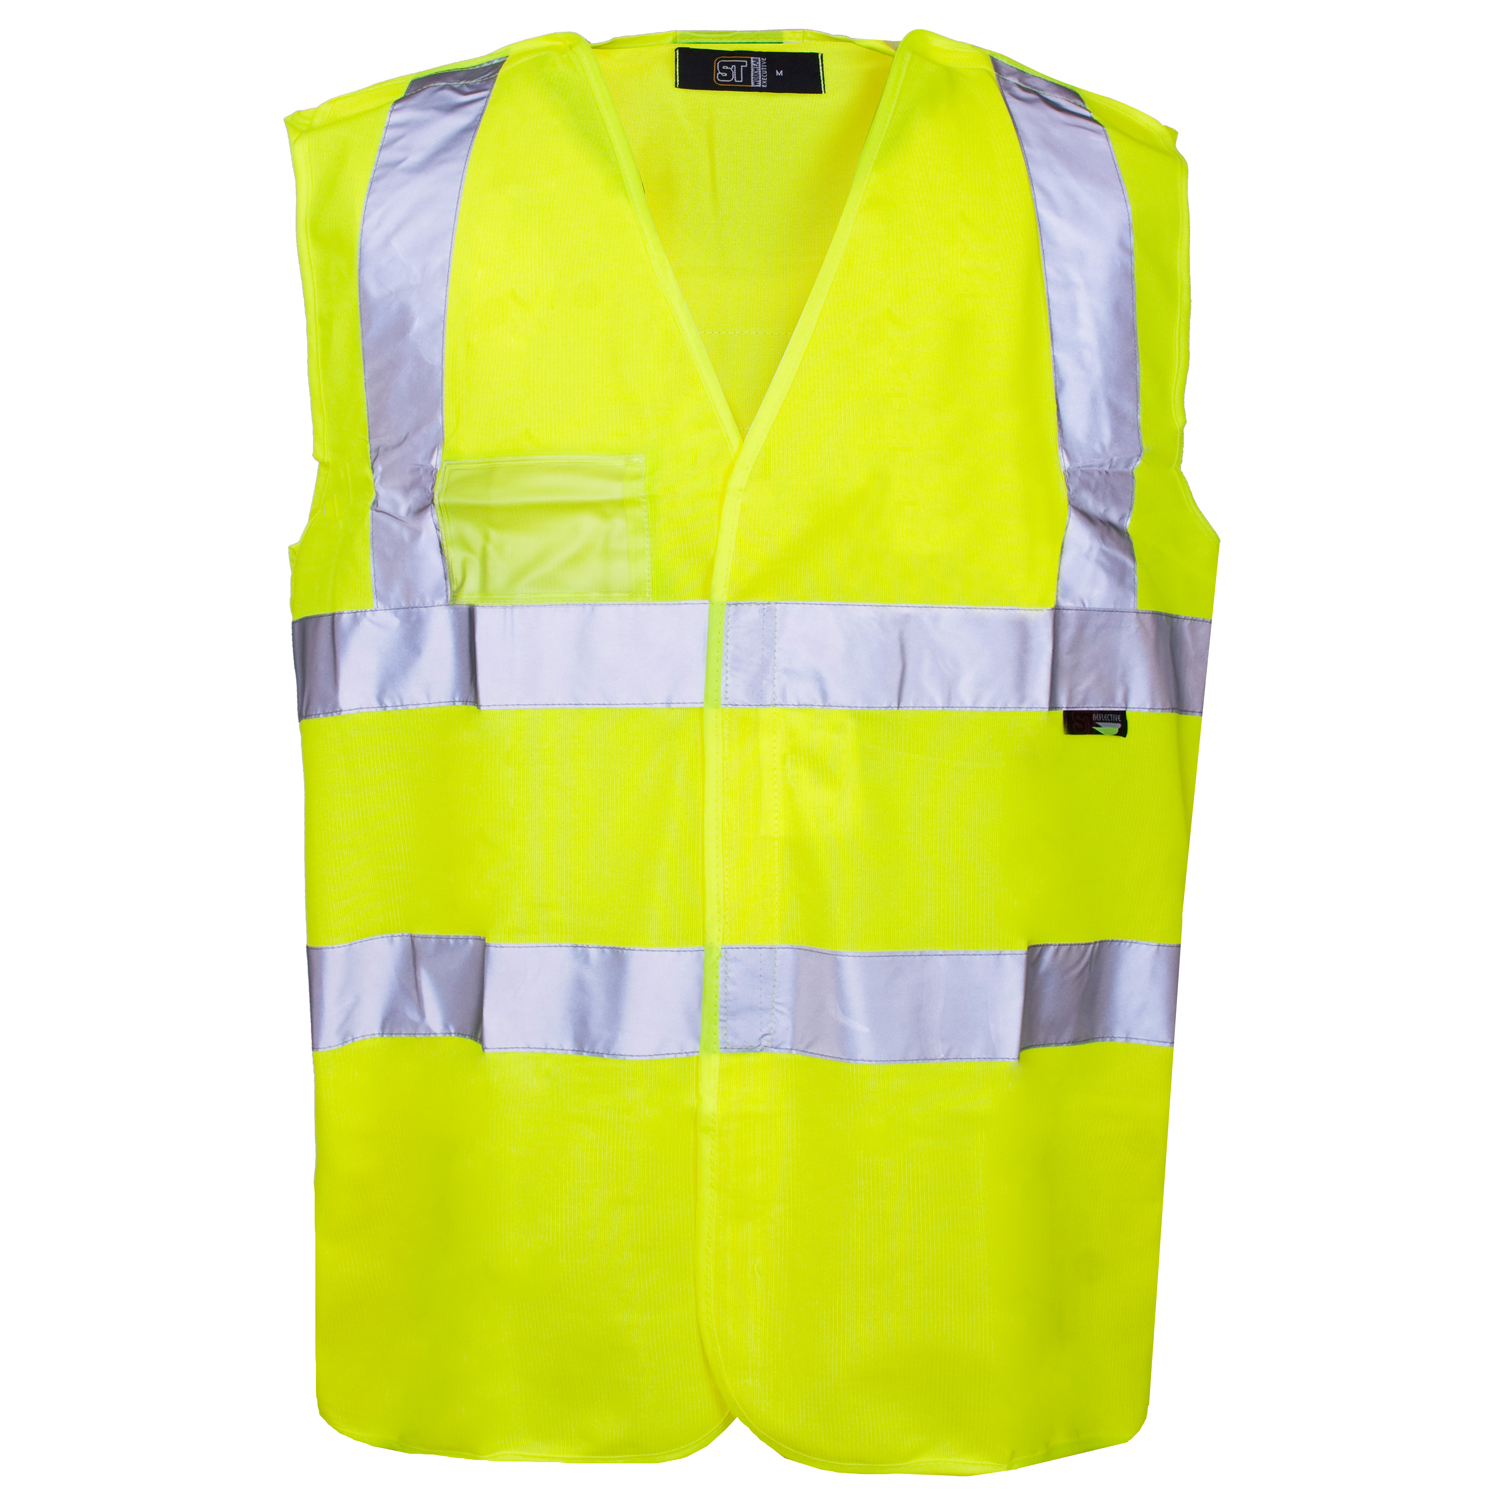 Pull Apart Hi Vis Waistcoat Safety Vest Yellow - Simply Hi Vis Clothing UK